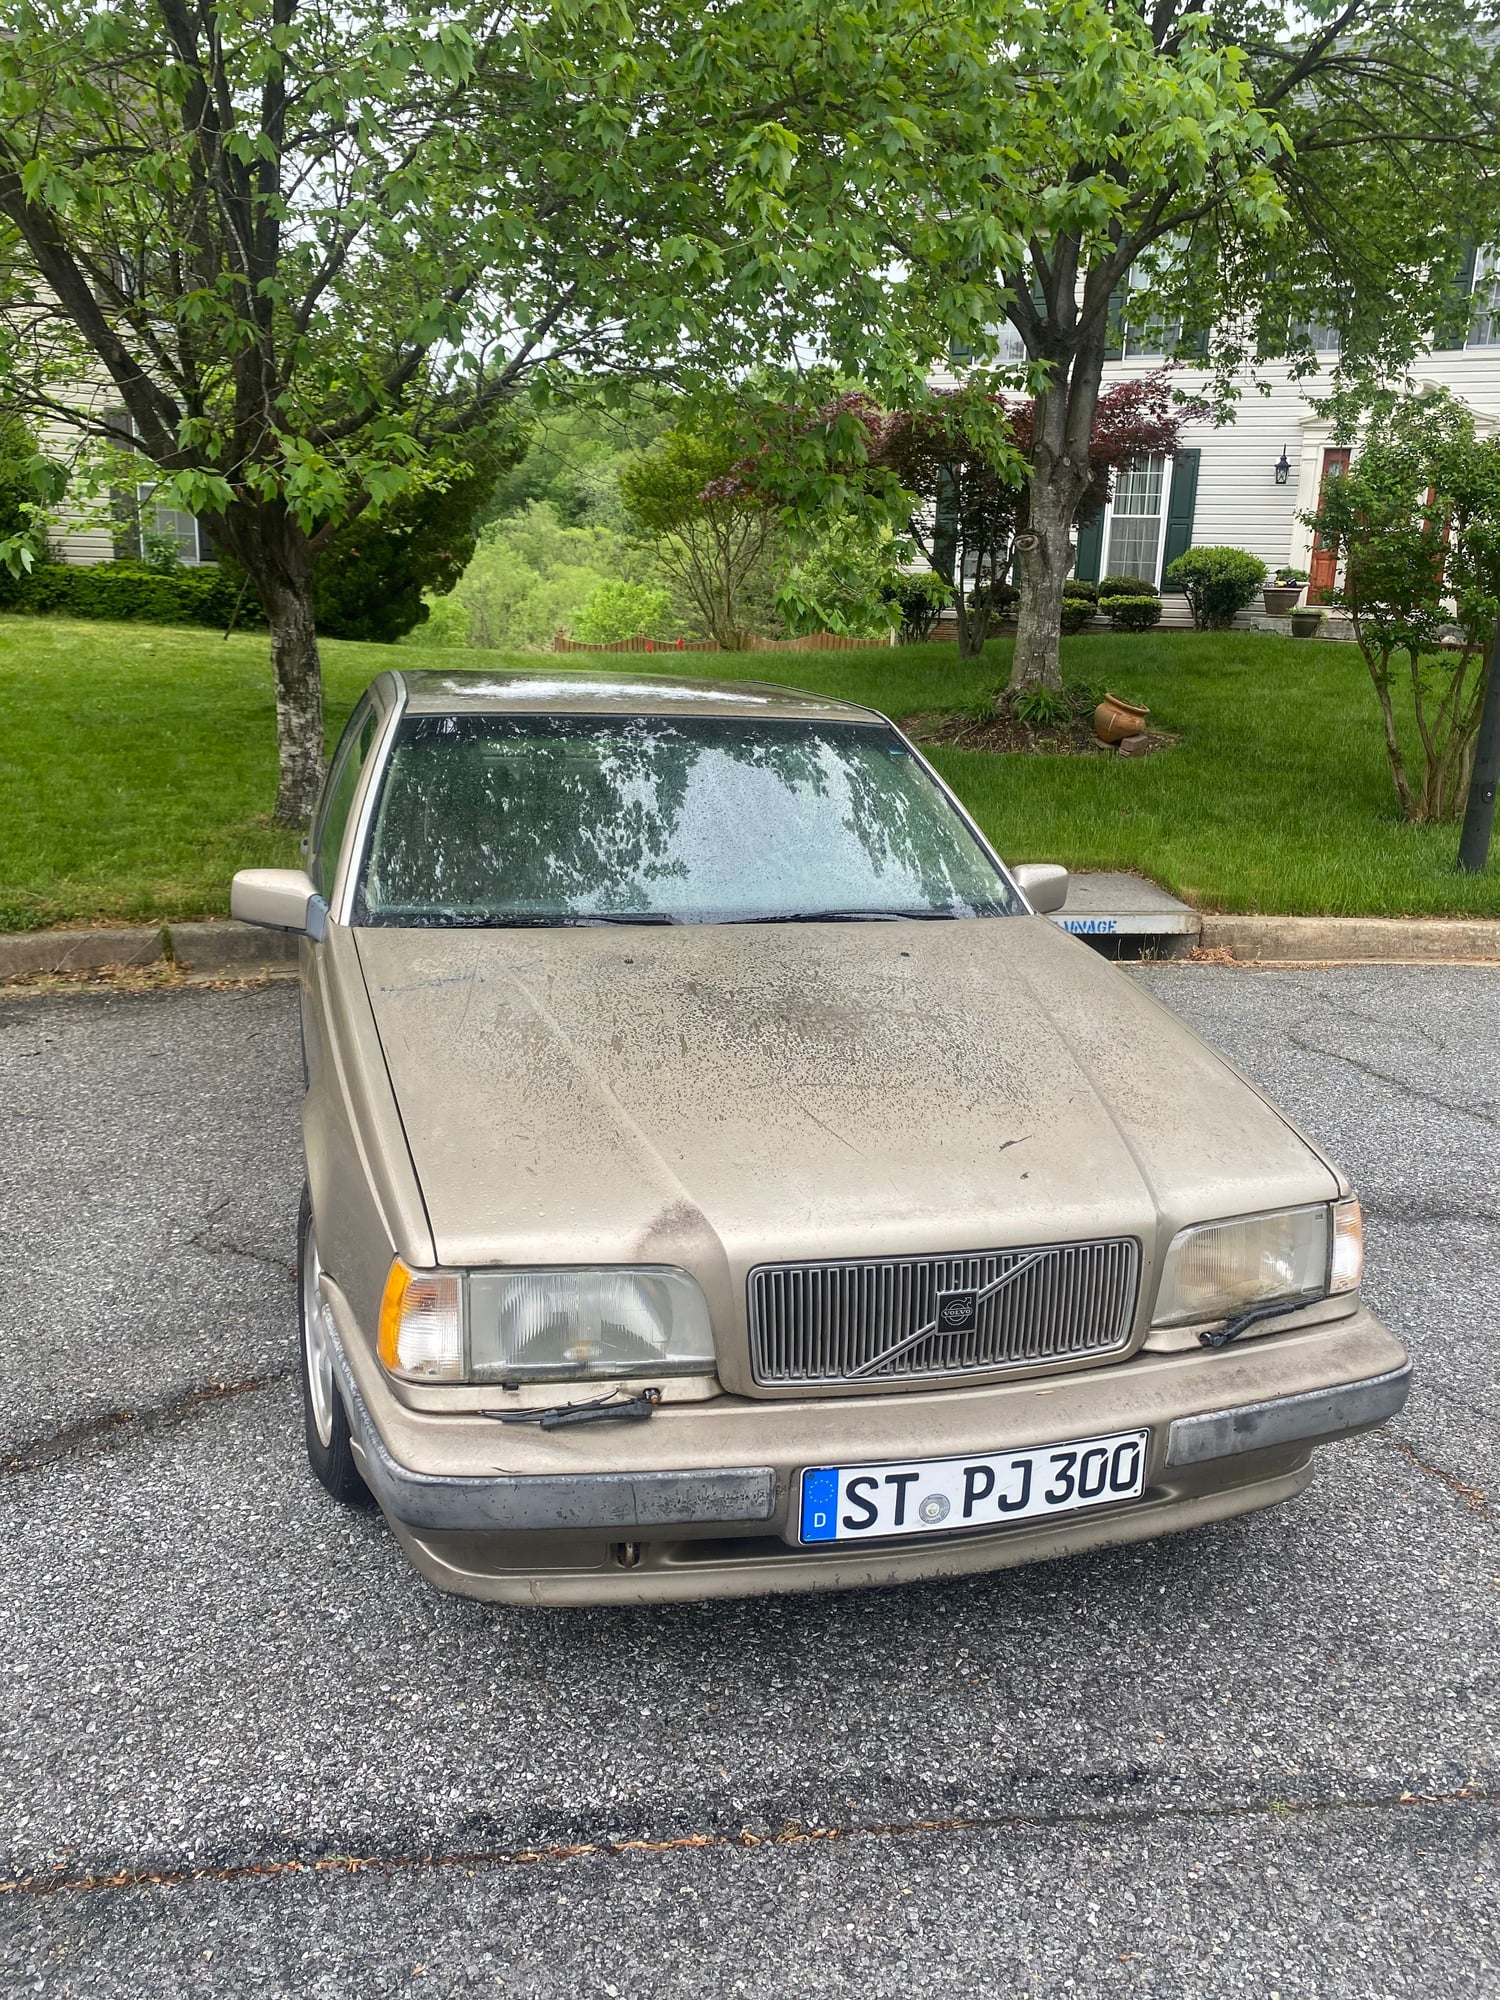 1993 Volvo 850 - 1993 Volvo 850 GLT - Used - VIN YVILS5502P2091858 - 122,872 Miles - 5 cyl - 2WD - Automatic - Sedan - Gold - Glenn Dale, MD 20706, United States